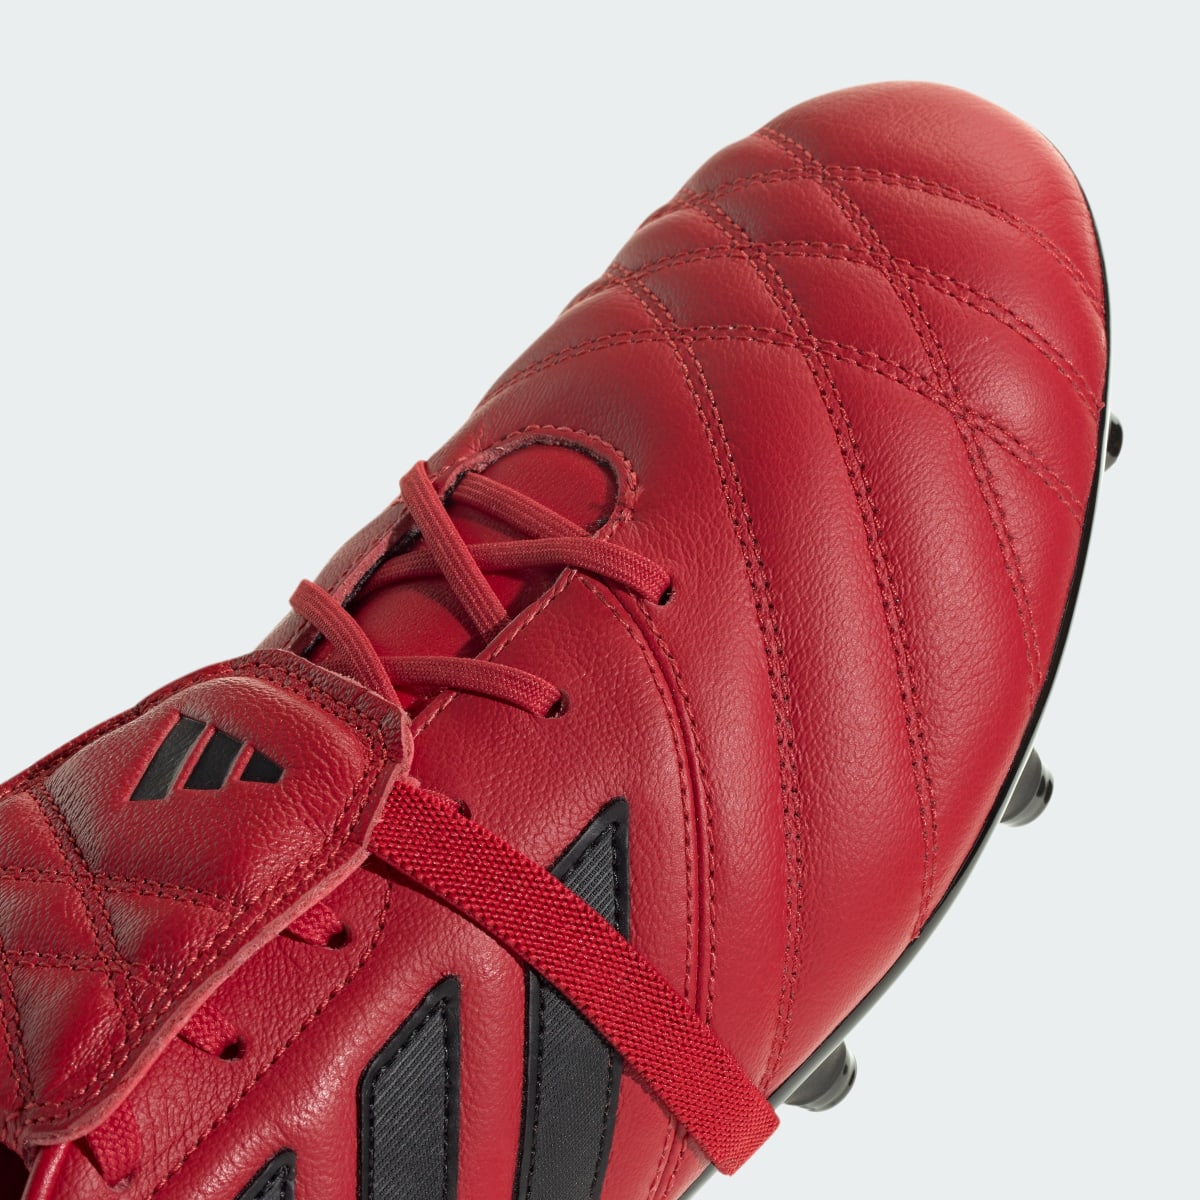 Adidas Copa Gloro Firm Ground Boots. 10